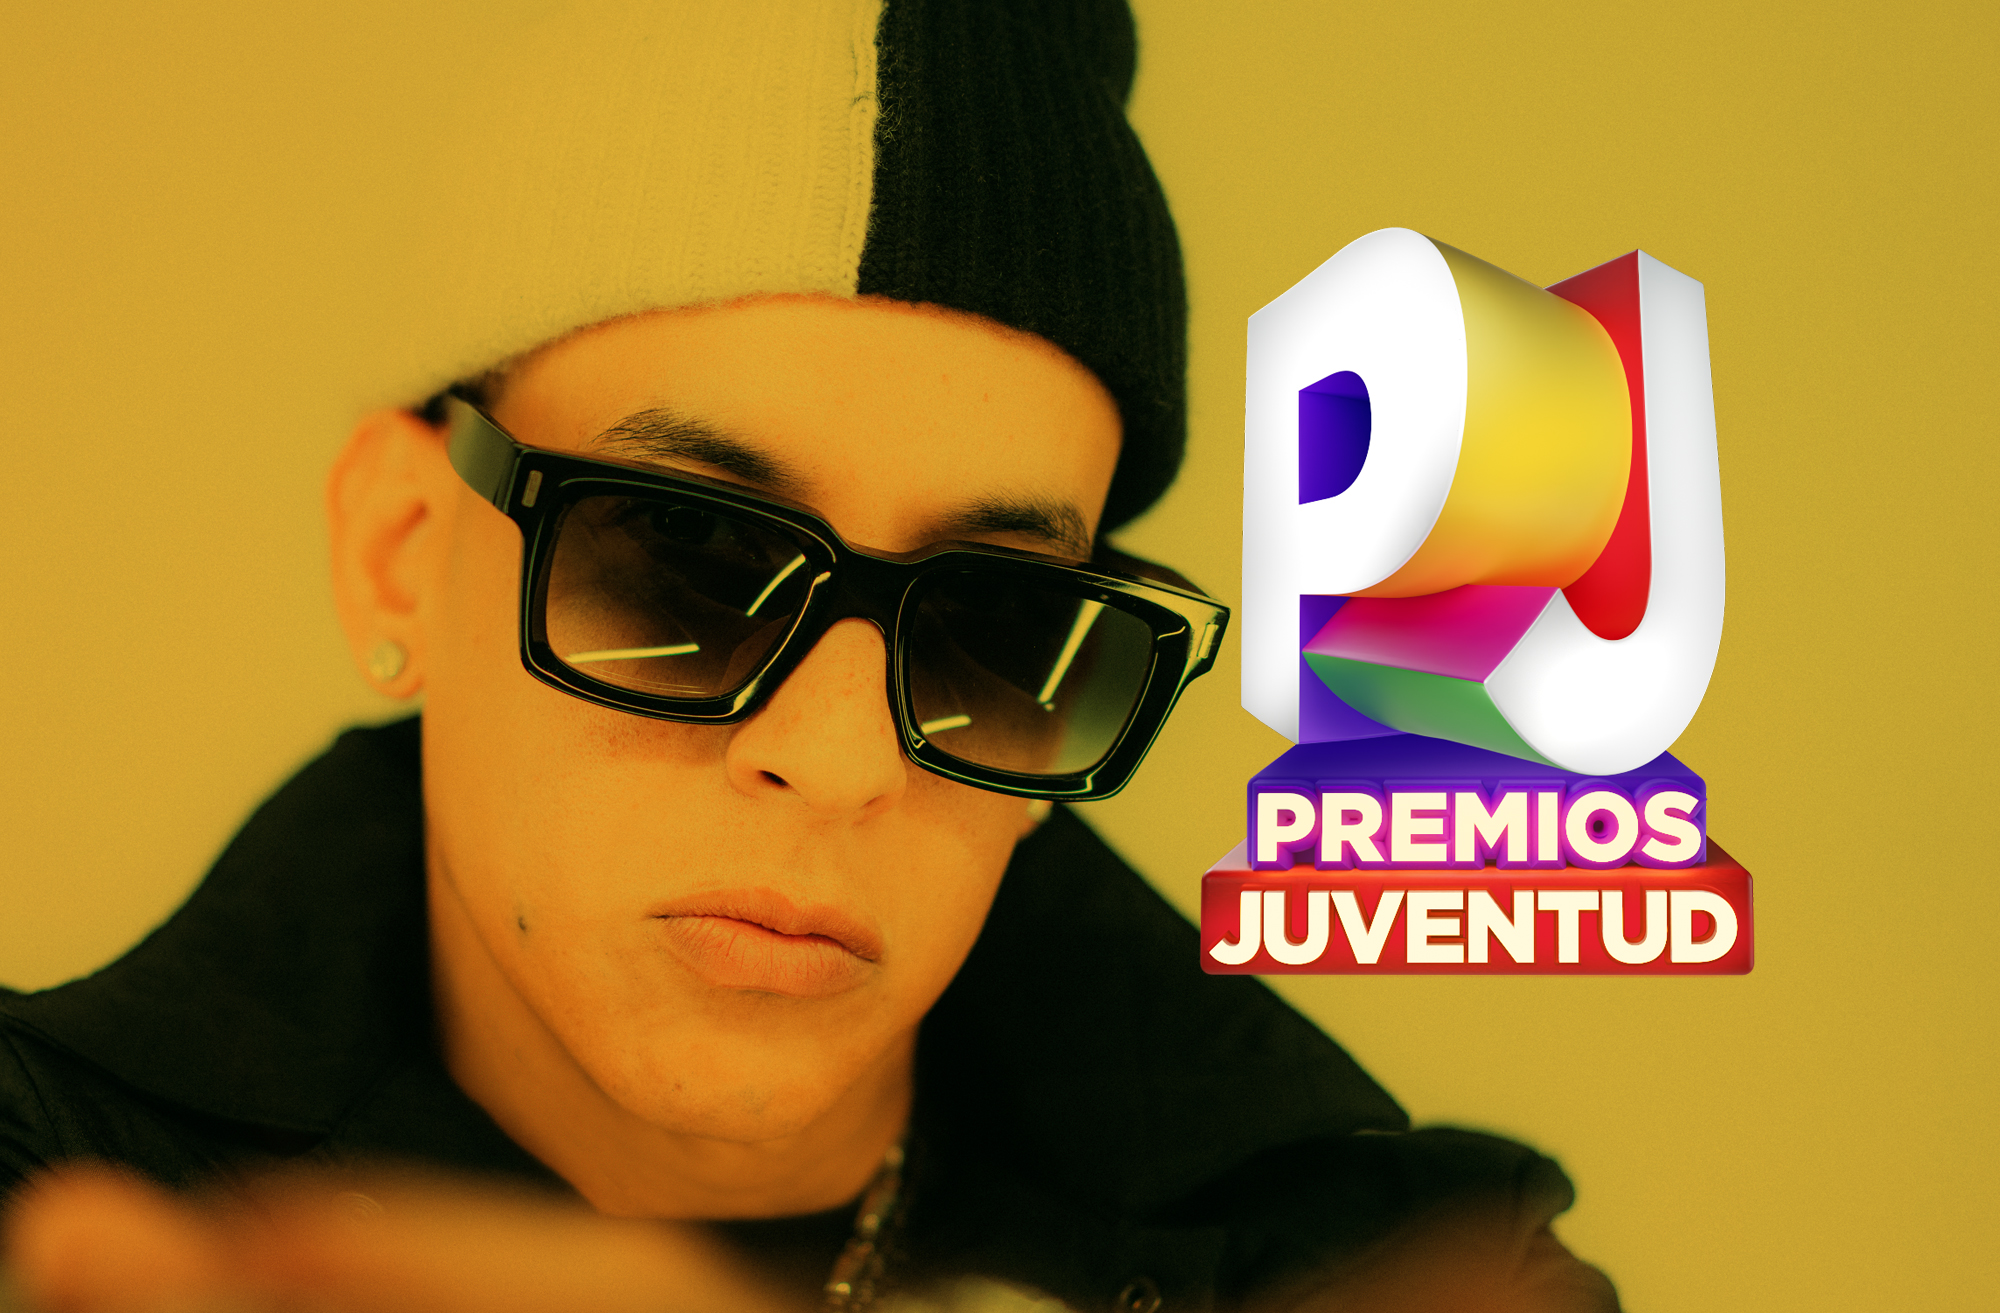 Daddy Yankee will be seen at Premios Juventud 2022 before 'La Última